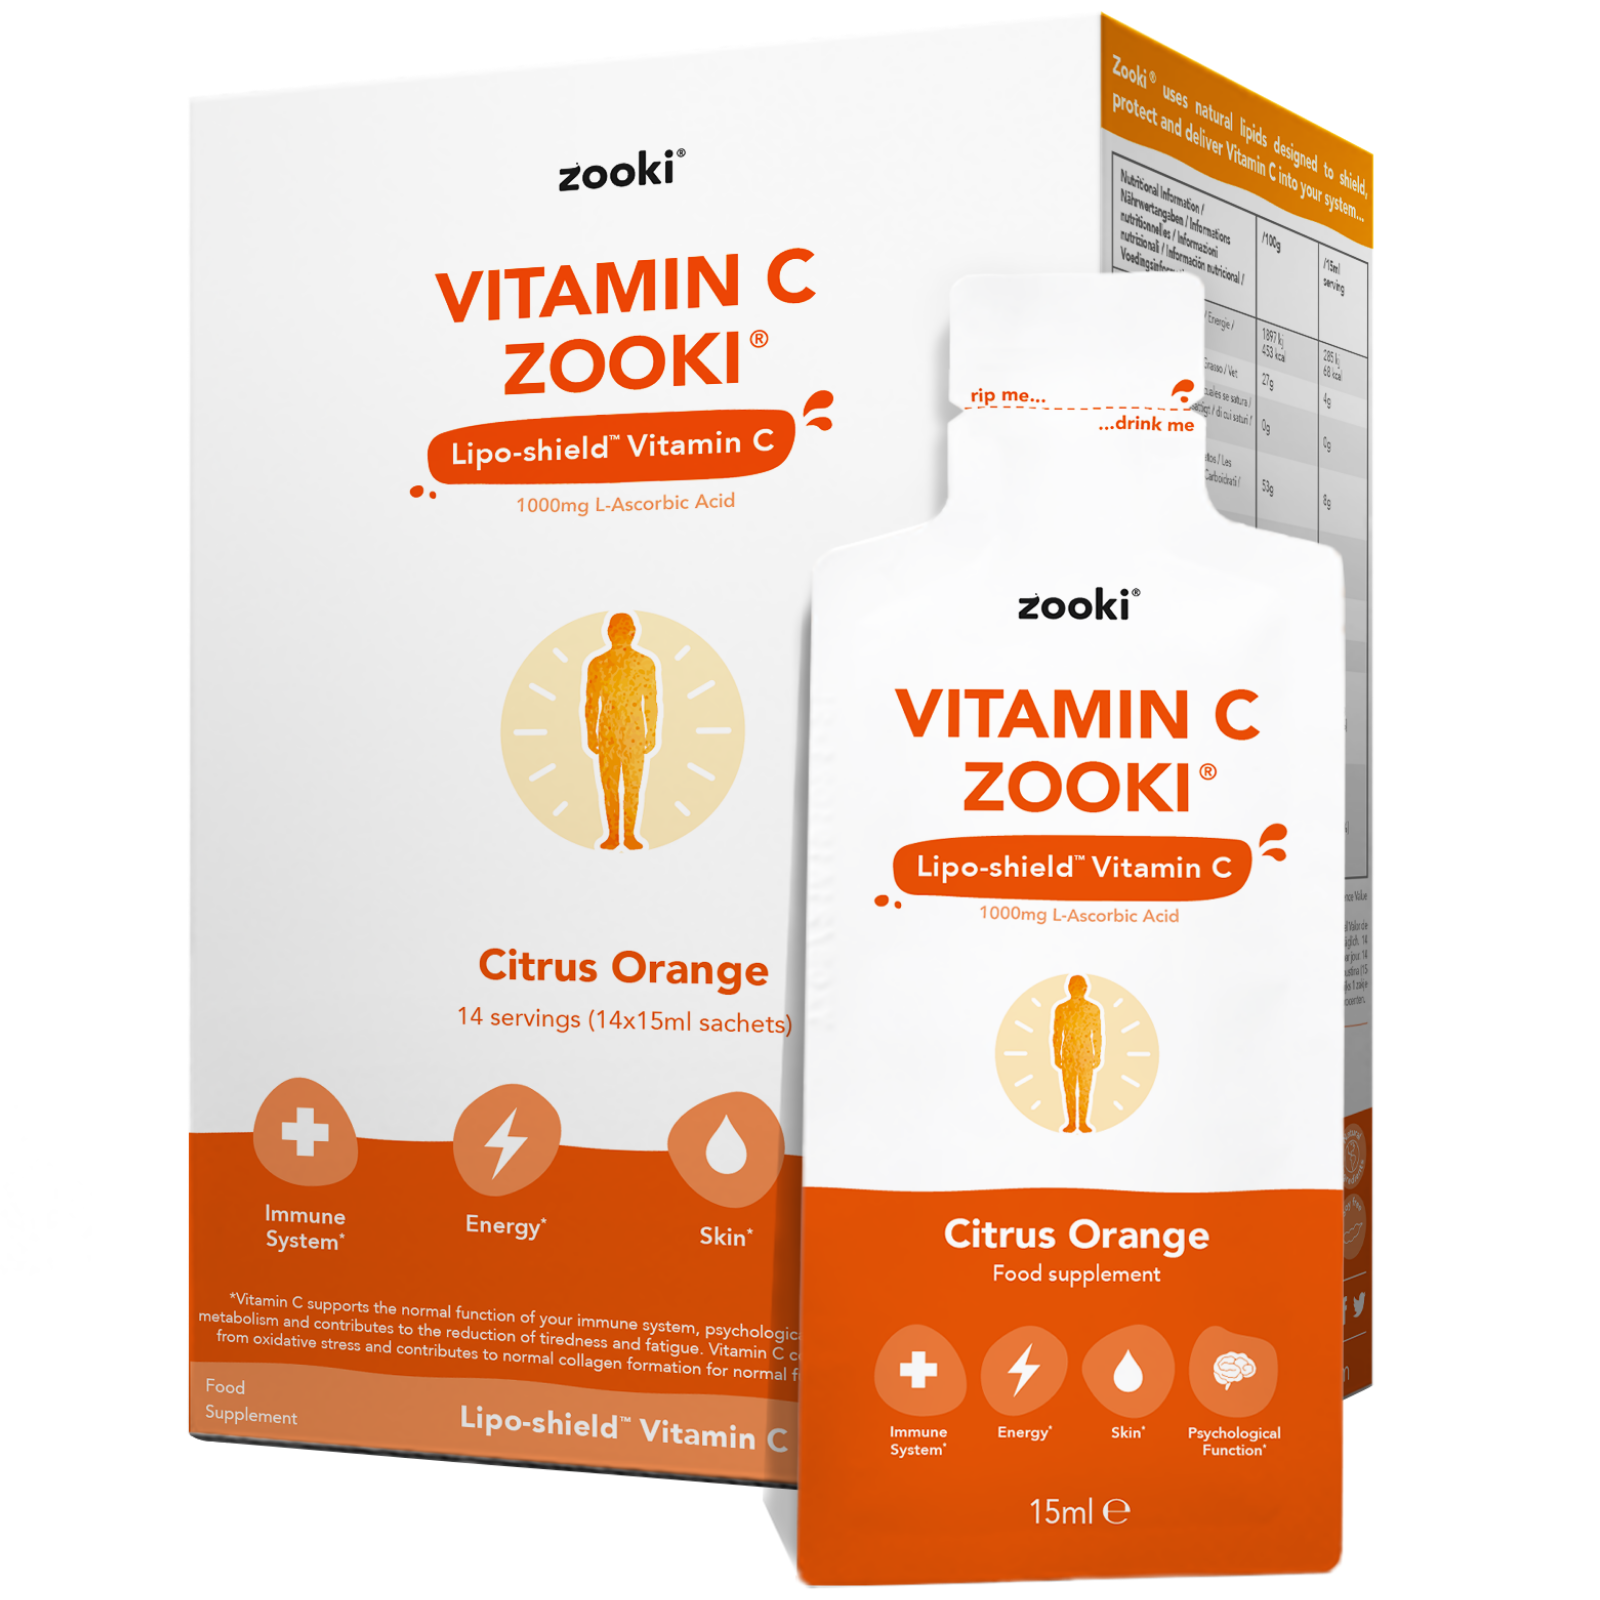 Vitamin C Zooki - Vitamin C 1000mg Liquid Sachets - Citrus Orange - Alcohol Free, Vegan, Soy Free, Natural Ingredients - Immune System, Skin & Energy Support